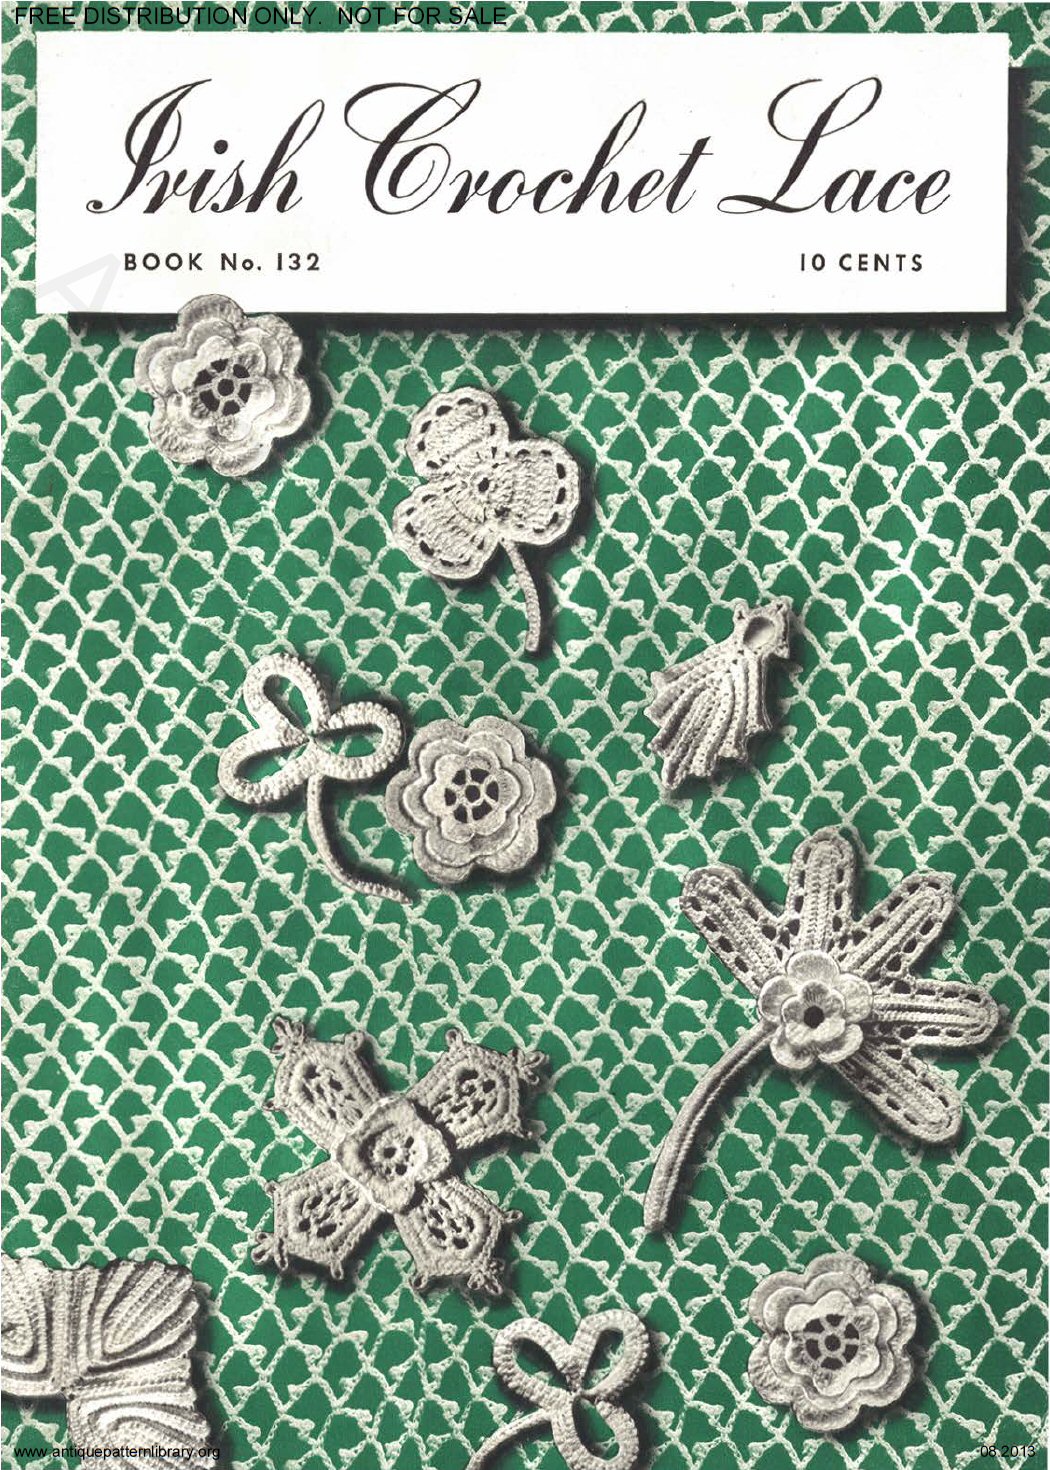 6-TA008 Irish Crochet Lace Book No. 132